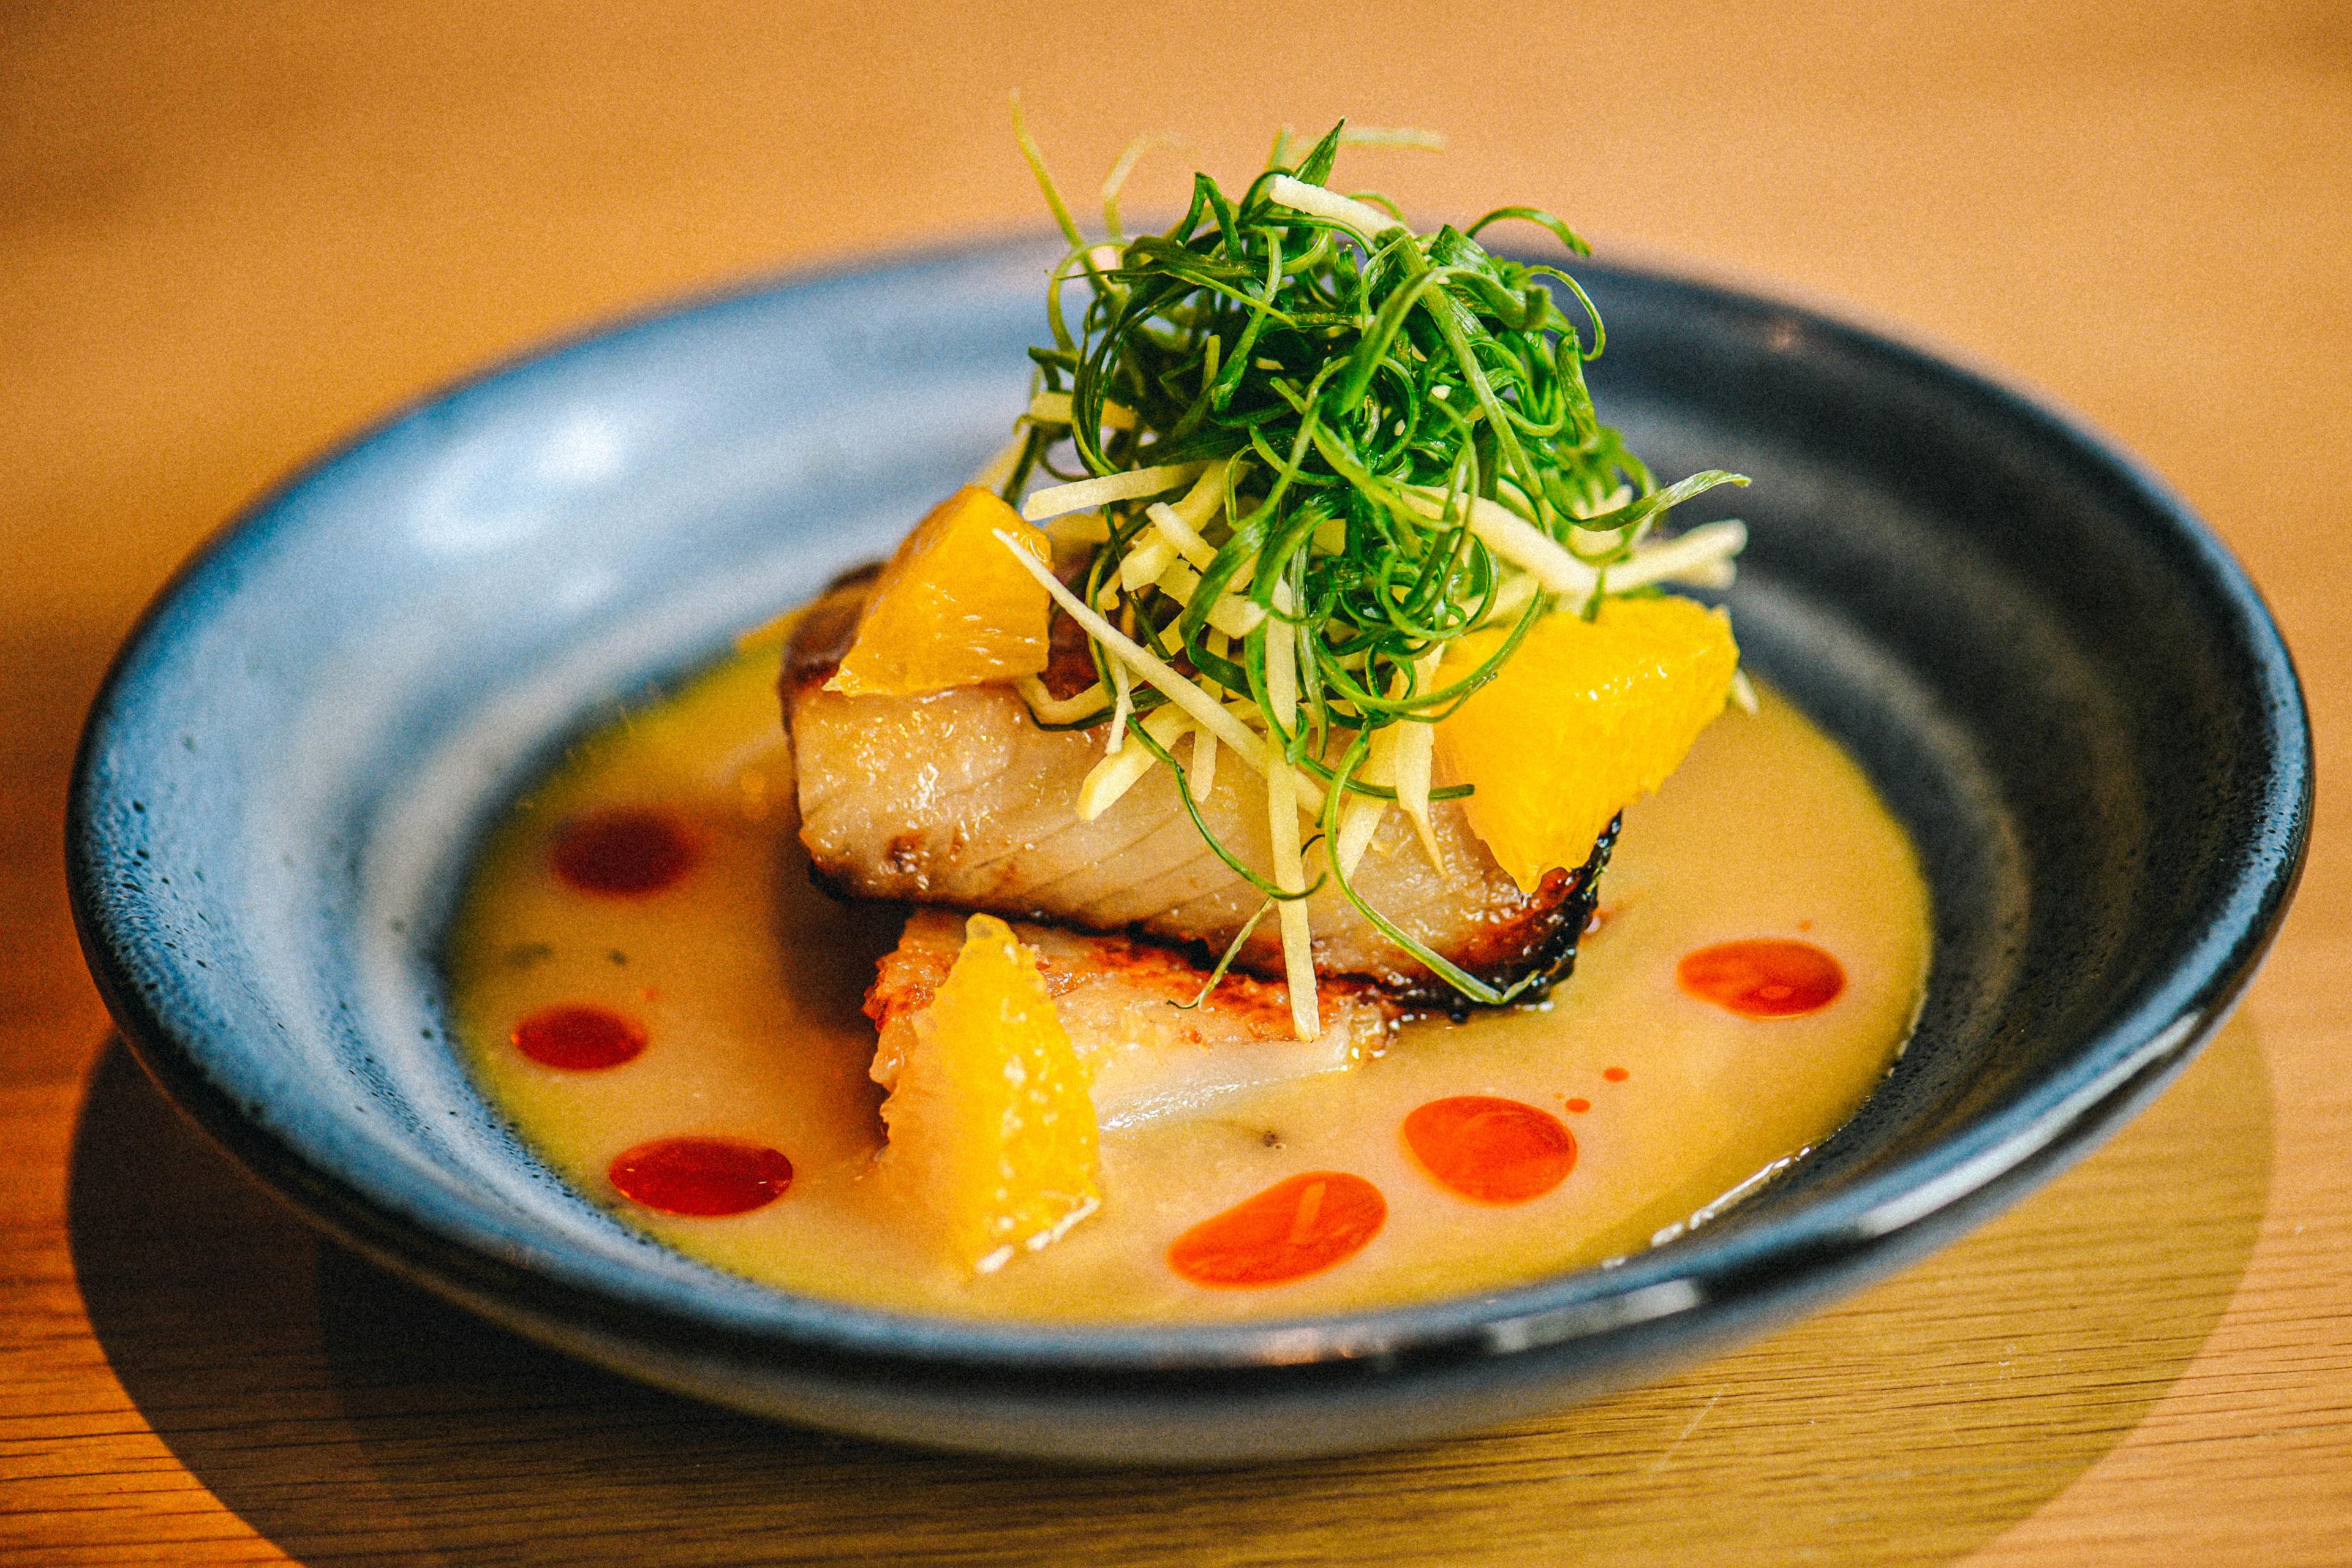 Miso glazed black cod in dish with yuzu miso sauce and garnishes.